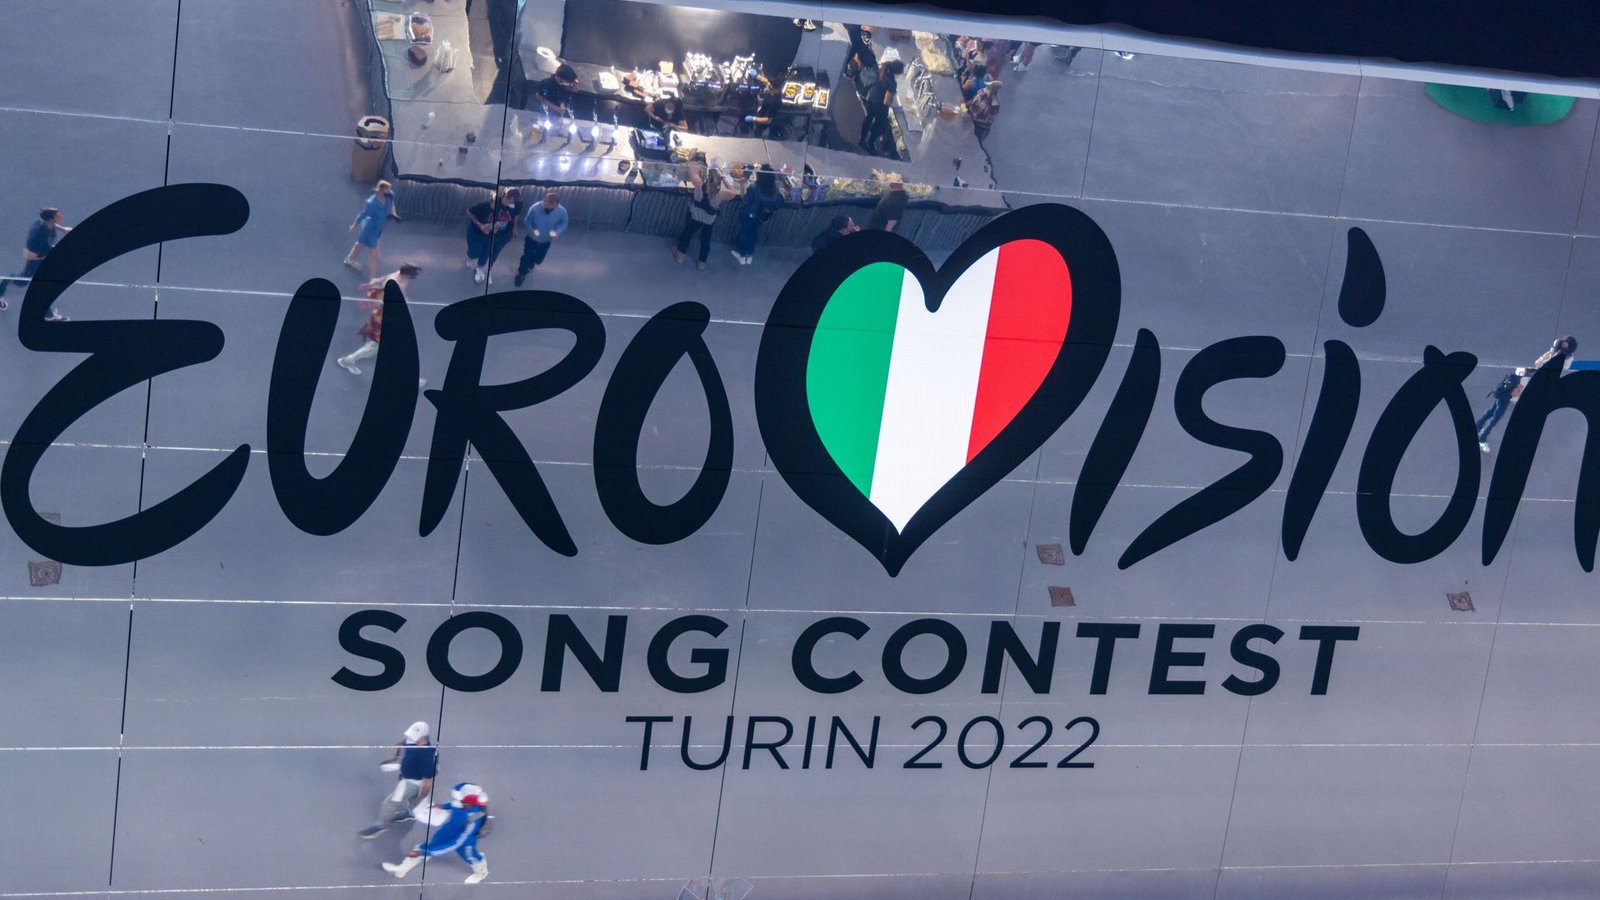 Großer Empfang: der Eurovision Song Contest 2022 steigt in TurinFoto: dpa/Jens Büttner